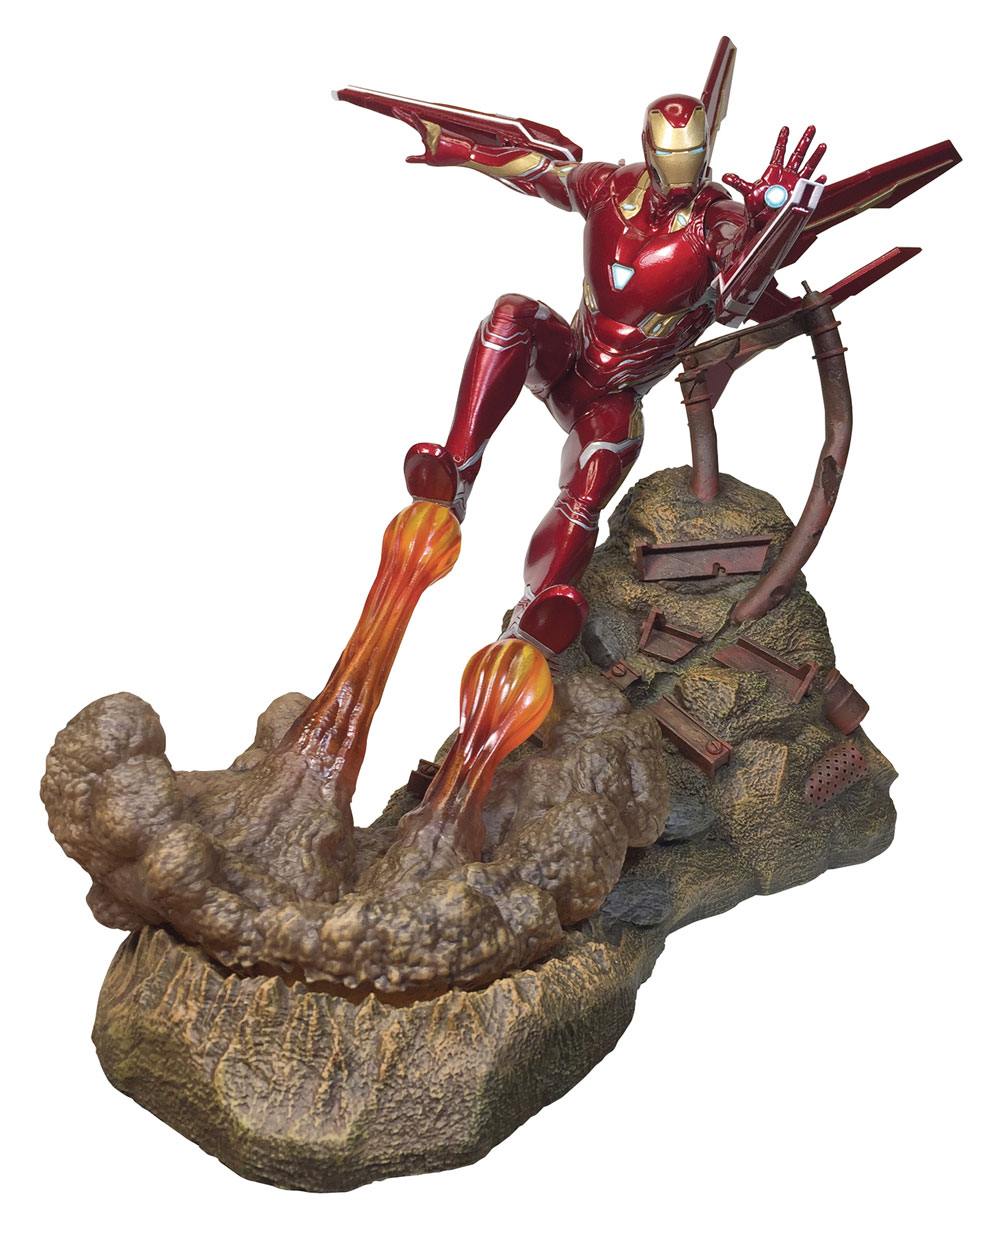 Avengers Infinity War Marvel Movie Premier Collection statuette Iron Man MK50 30 cm